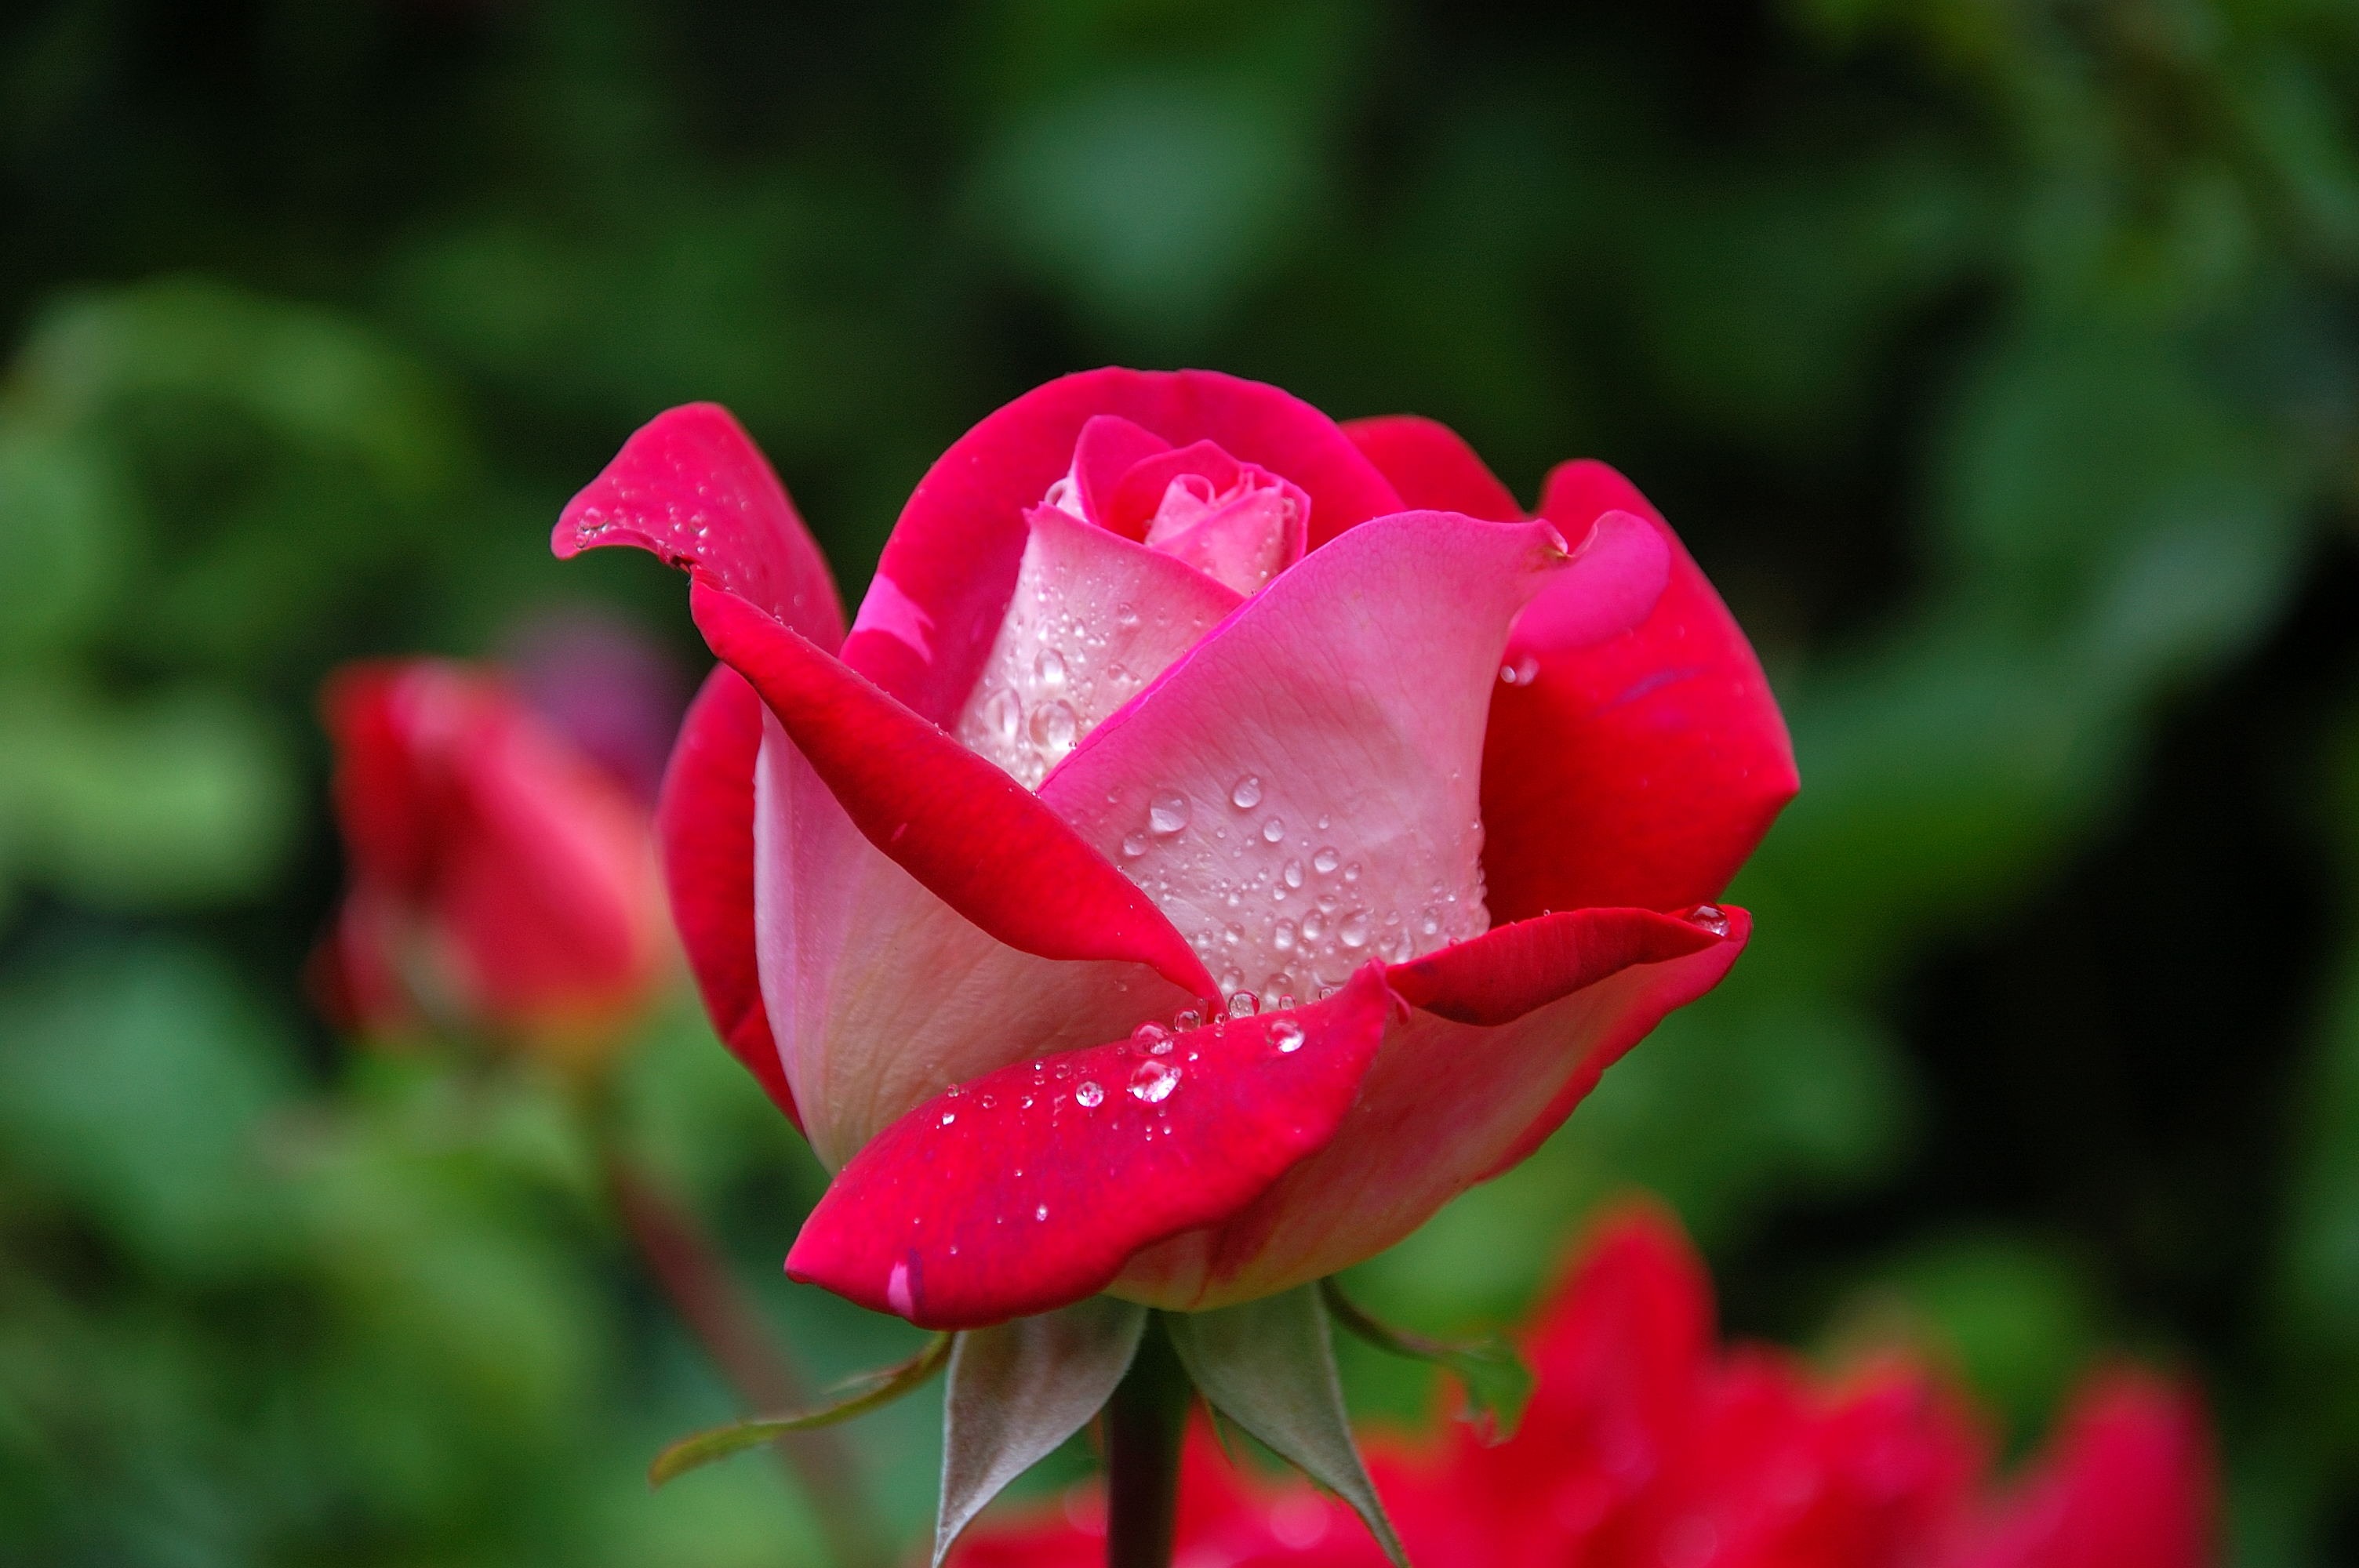 Rose images